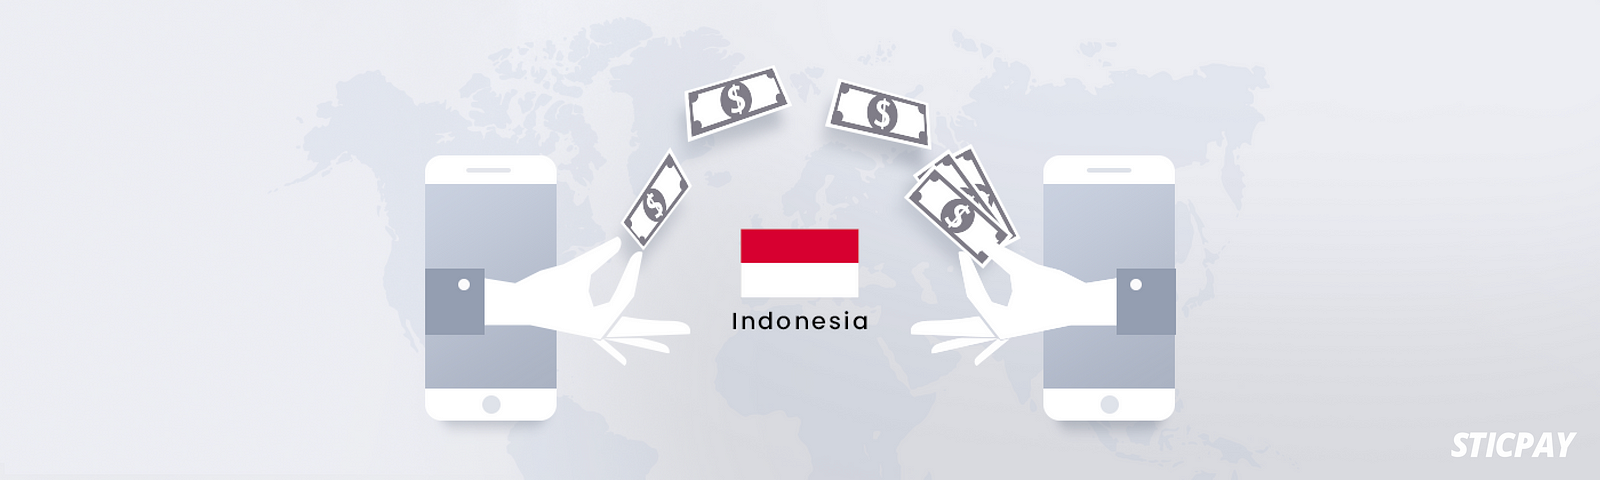 International money transfer policy: Indonesia